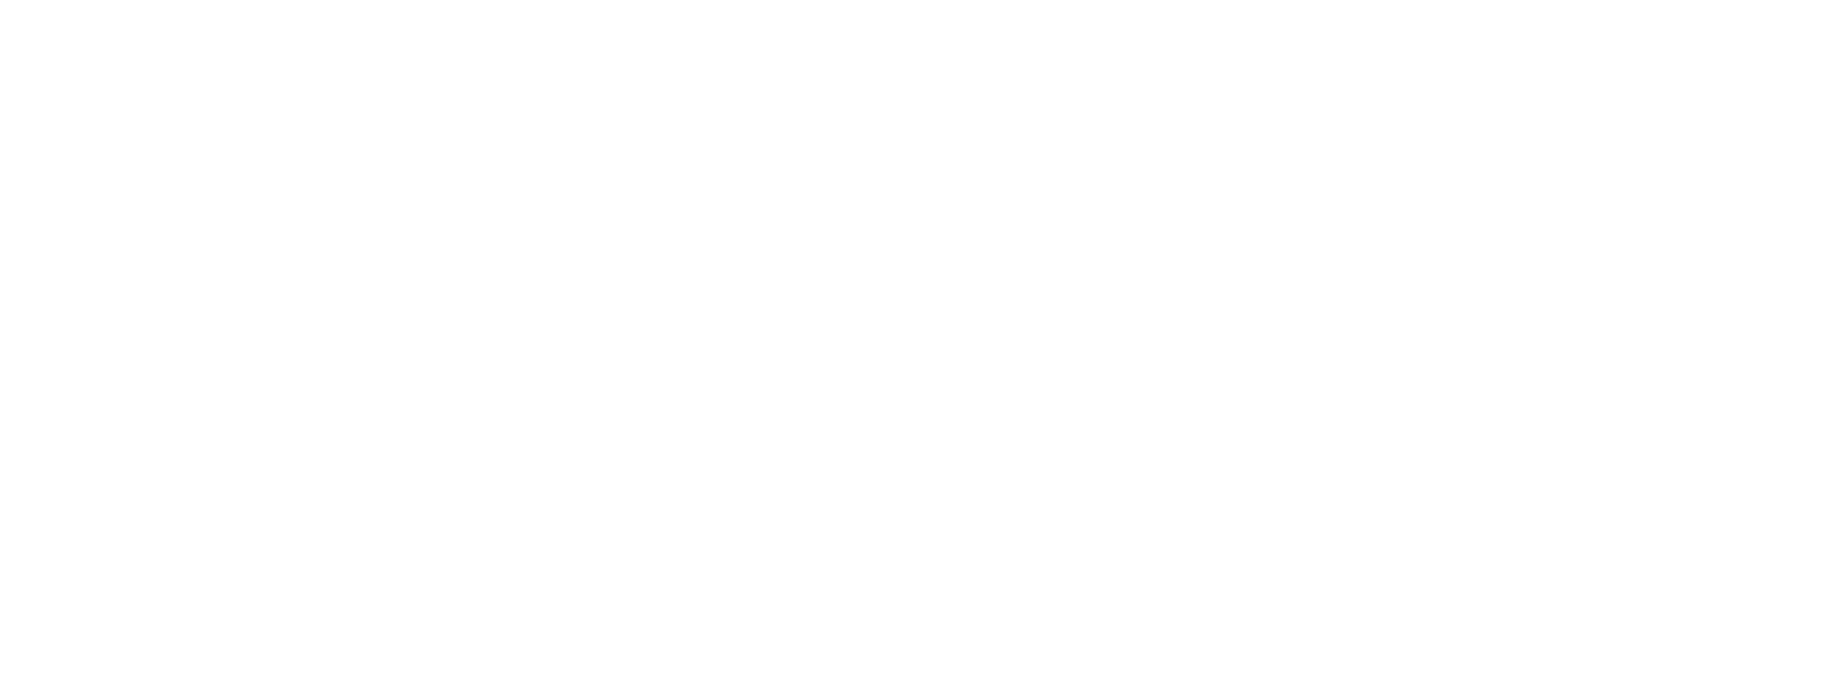 Black Travel Summit | Black Travel